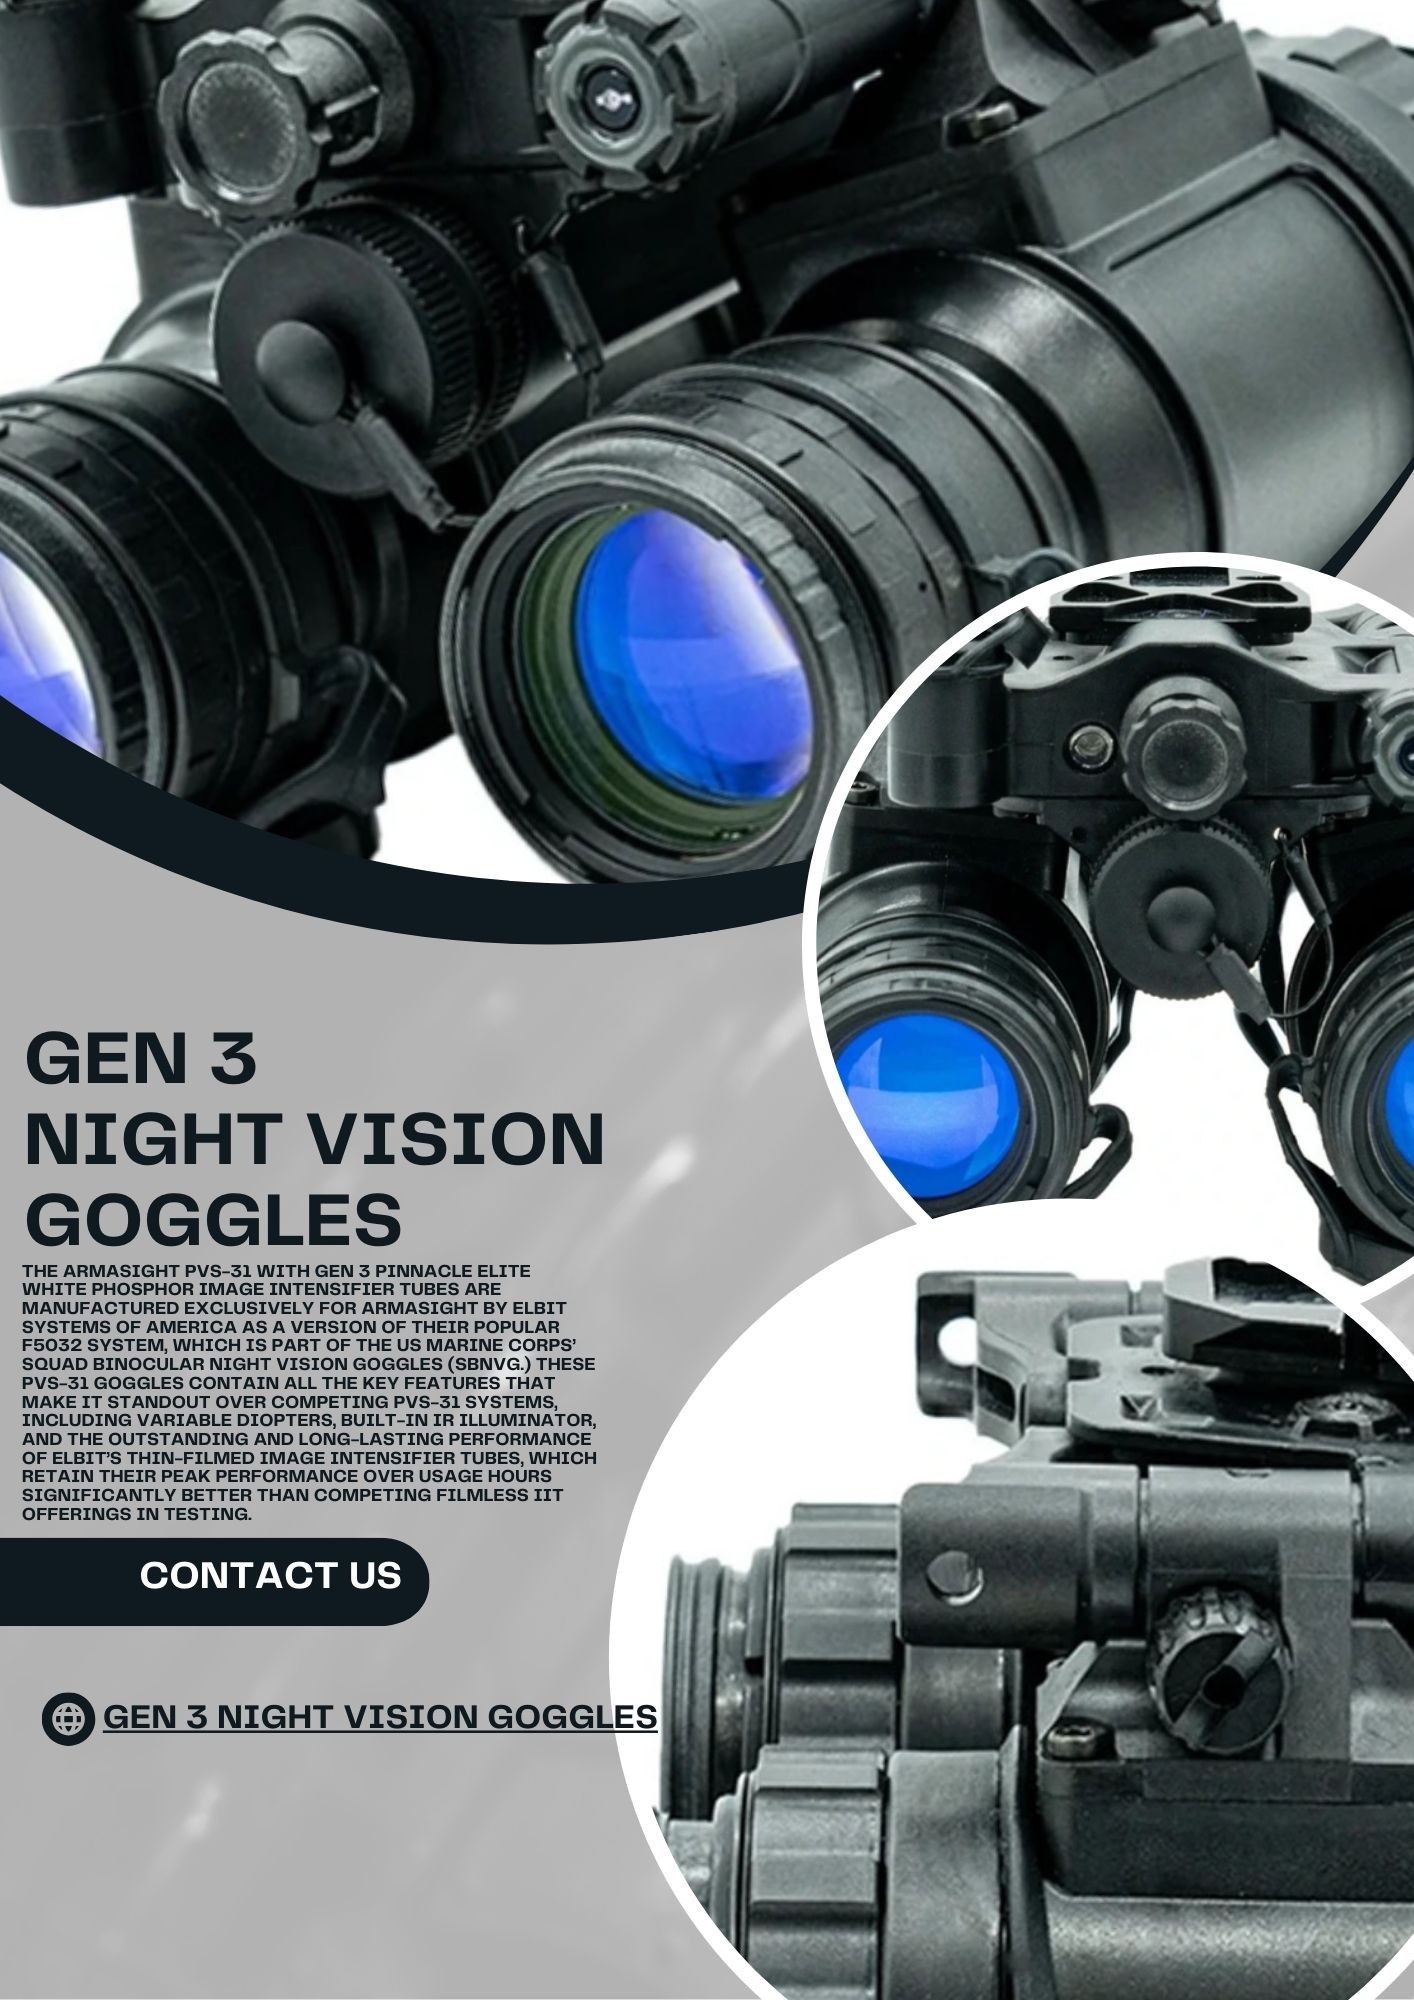 Gen 3 Night Vision Goggles